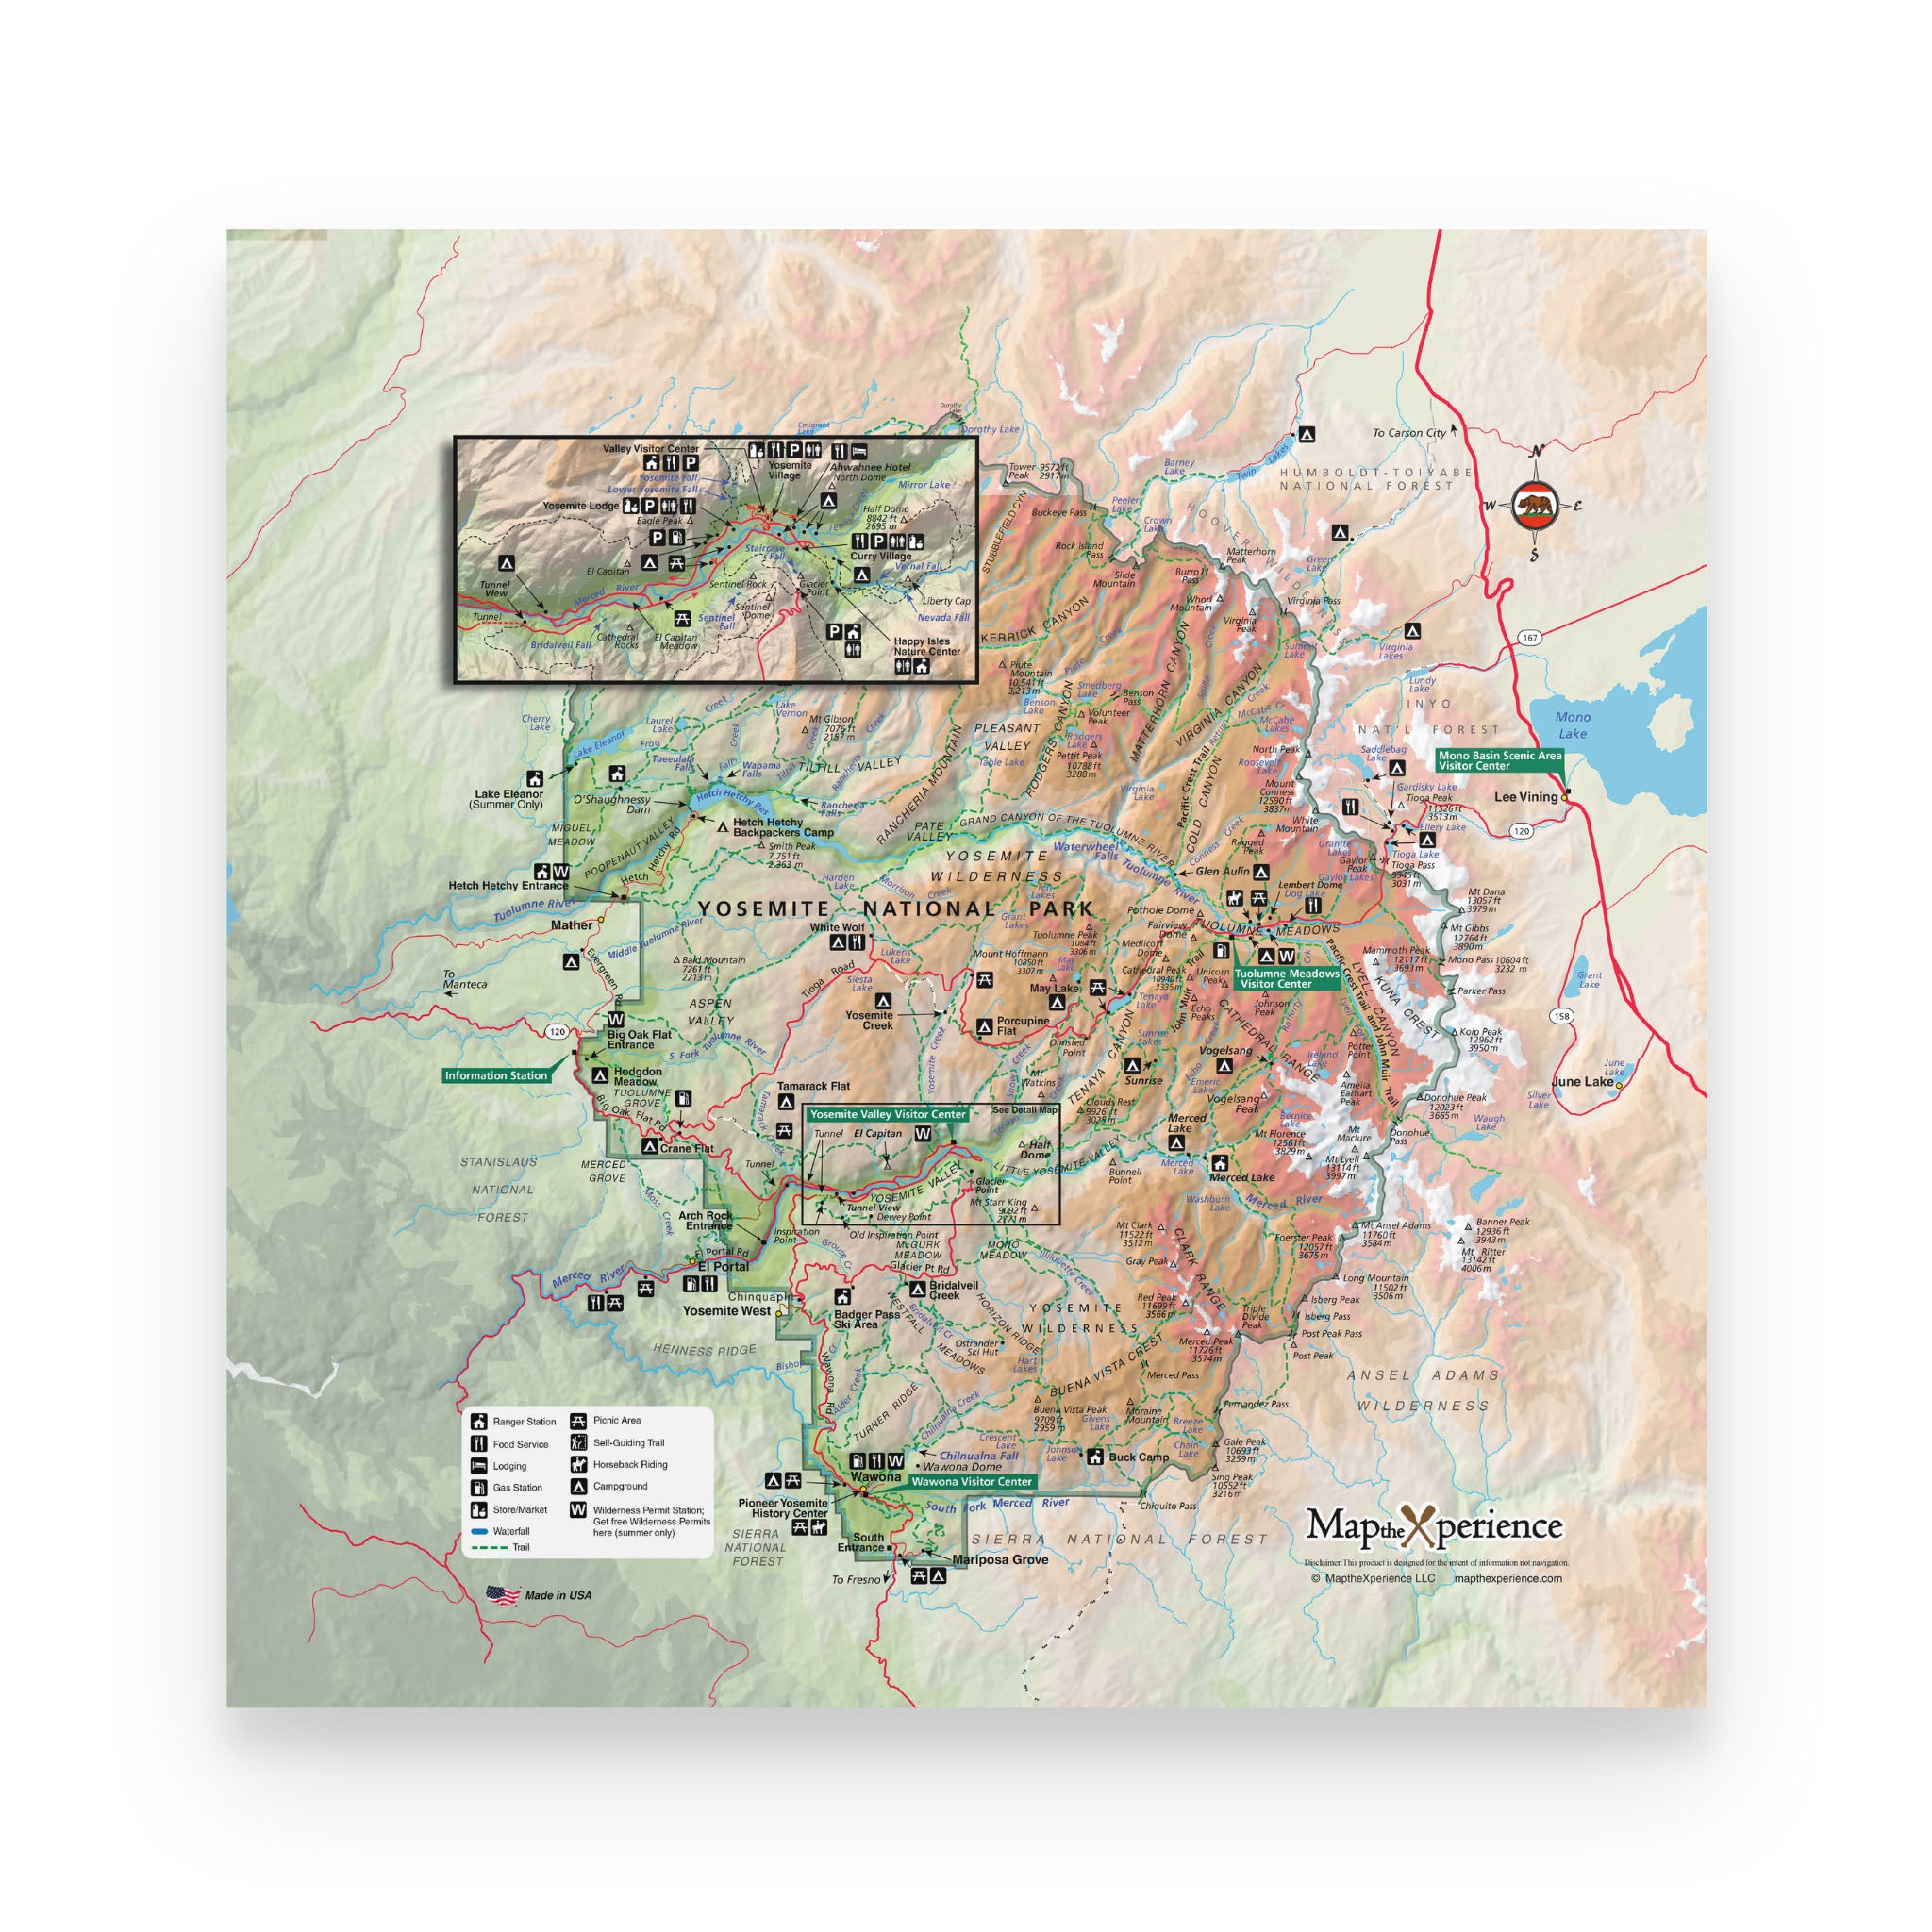 Yosemite National Park Map Poster | Free Mobile Map